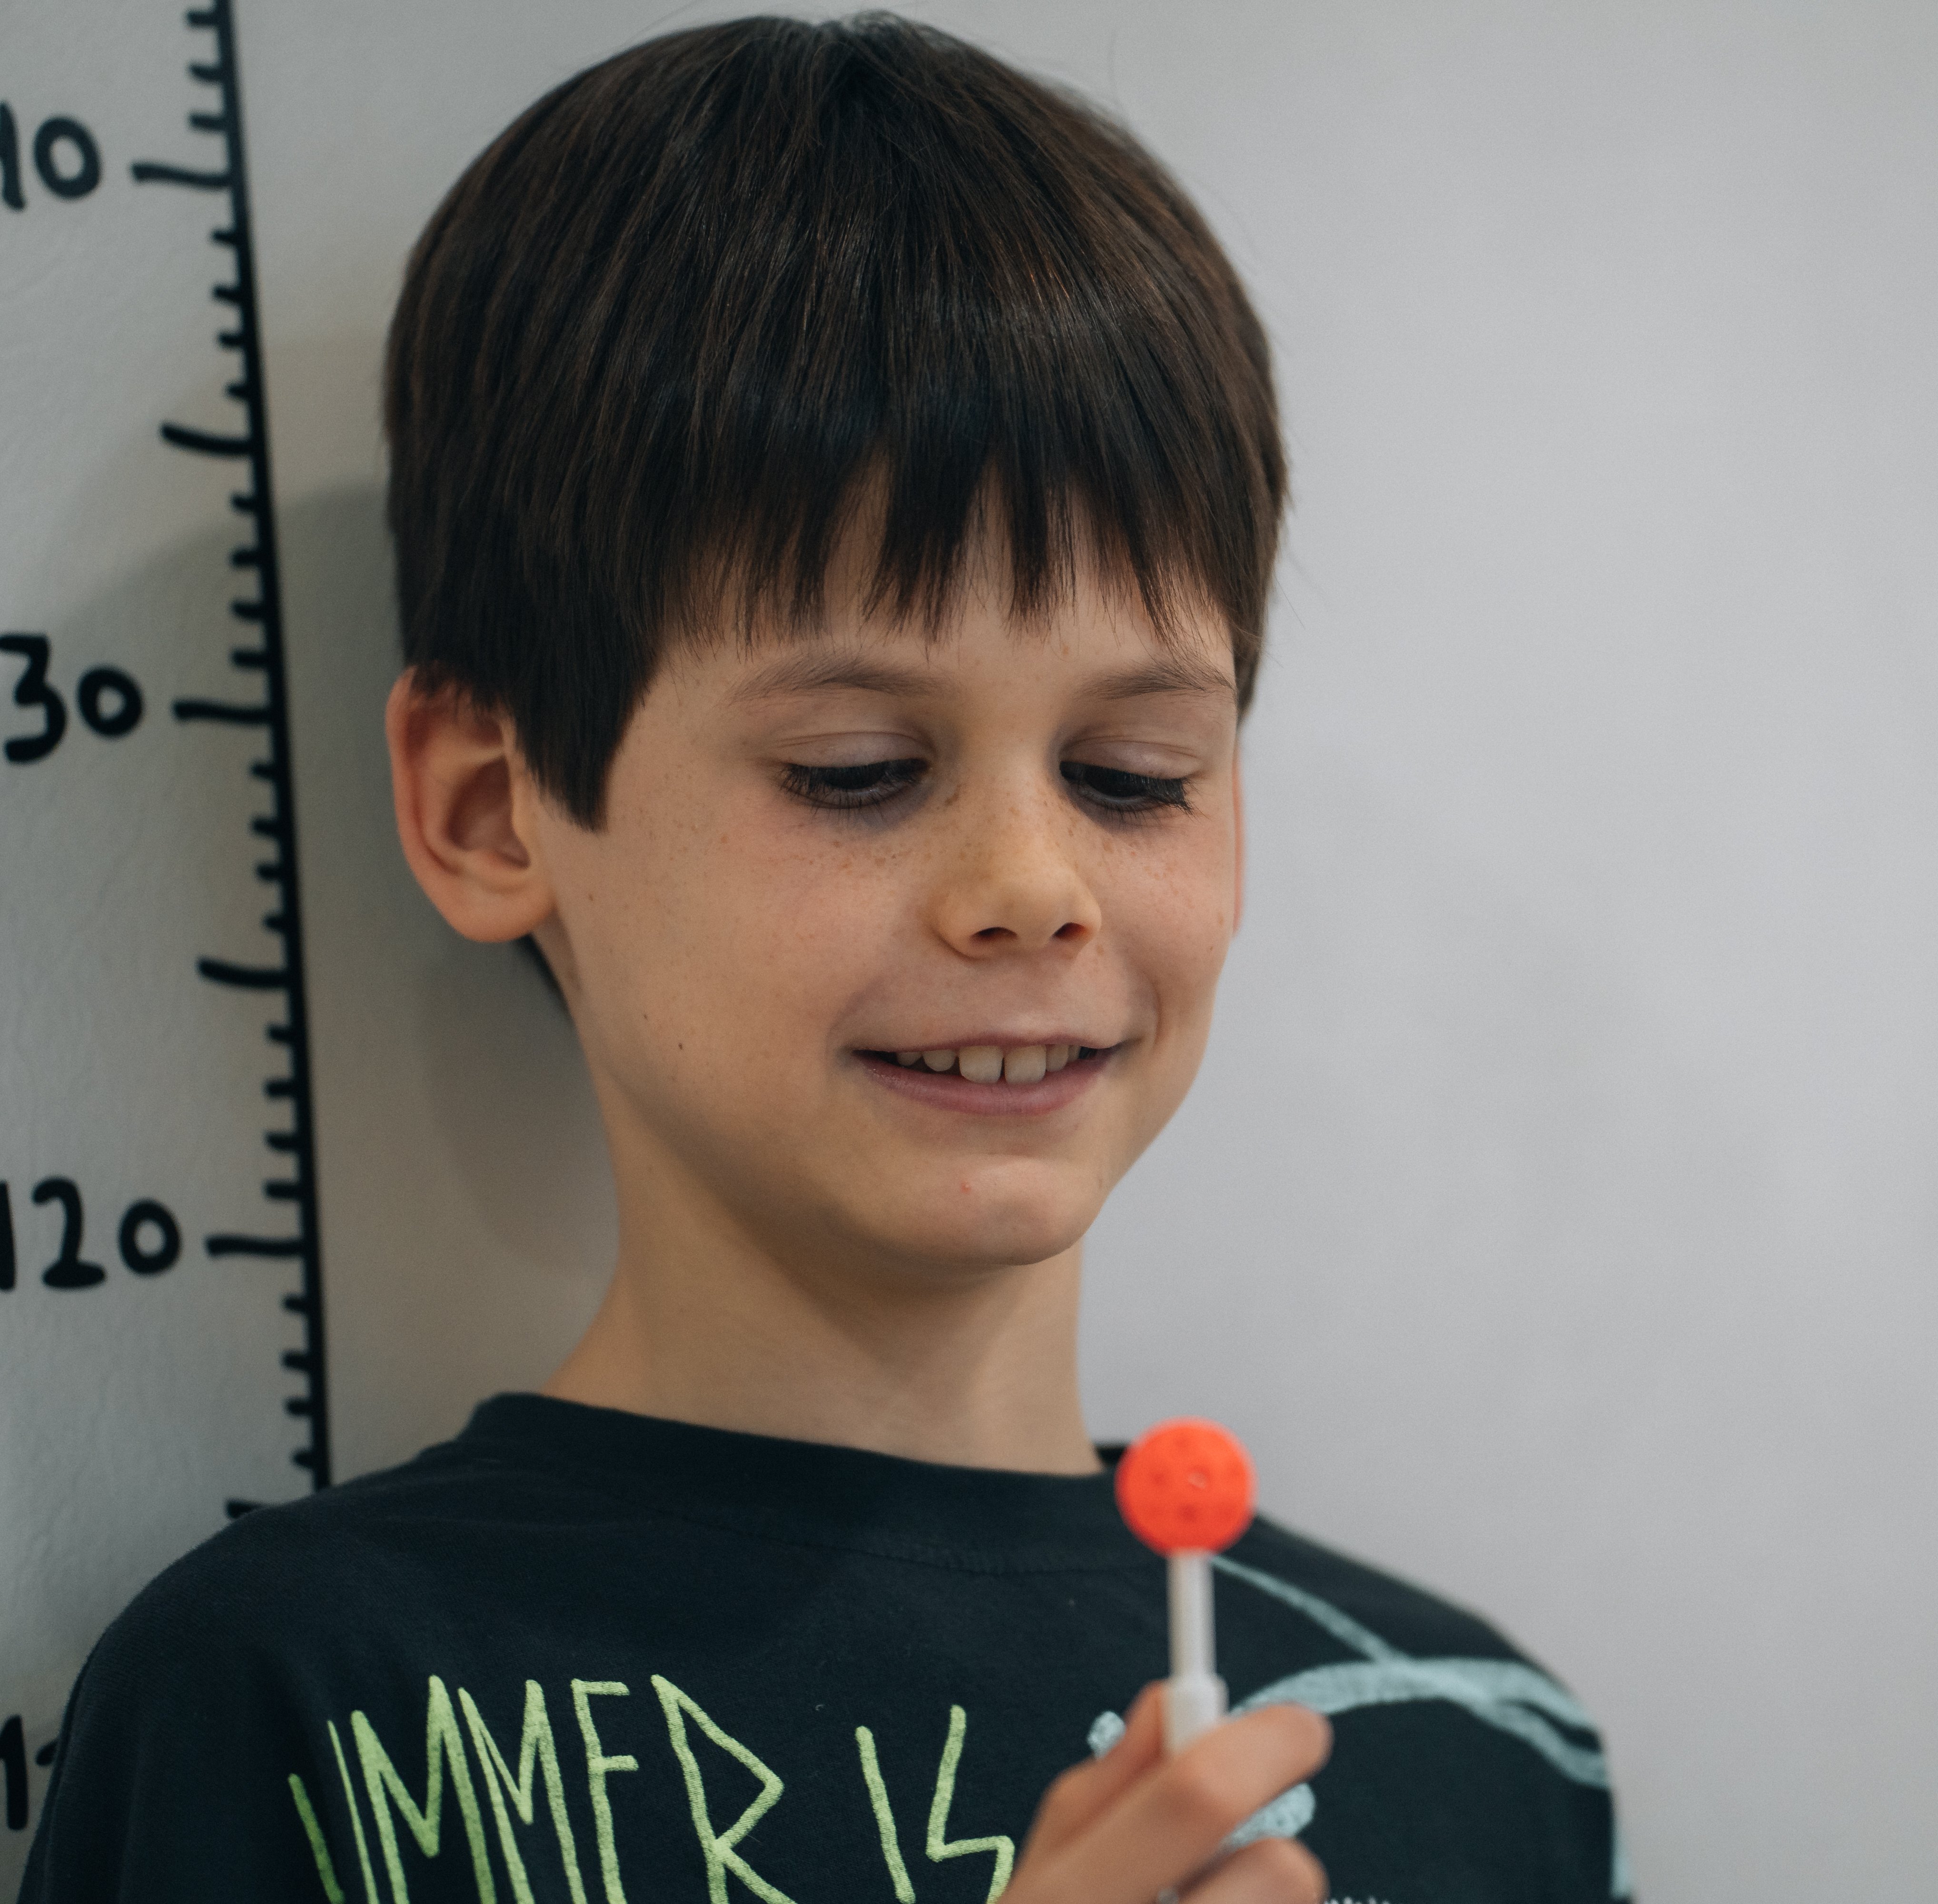 The Smart Lollipop, un caramelo inteligente que detecta enfermedades